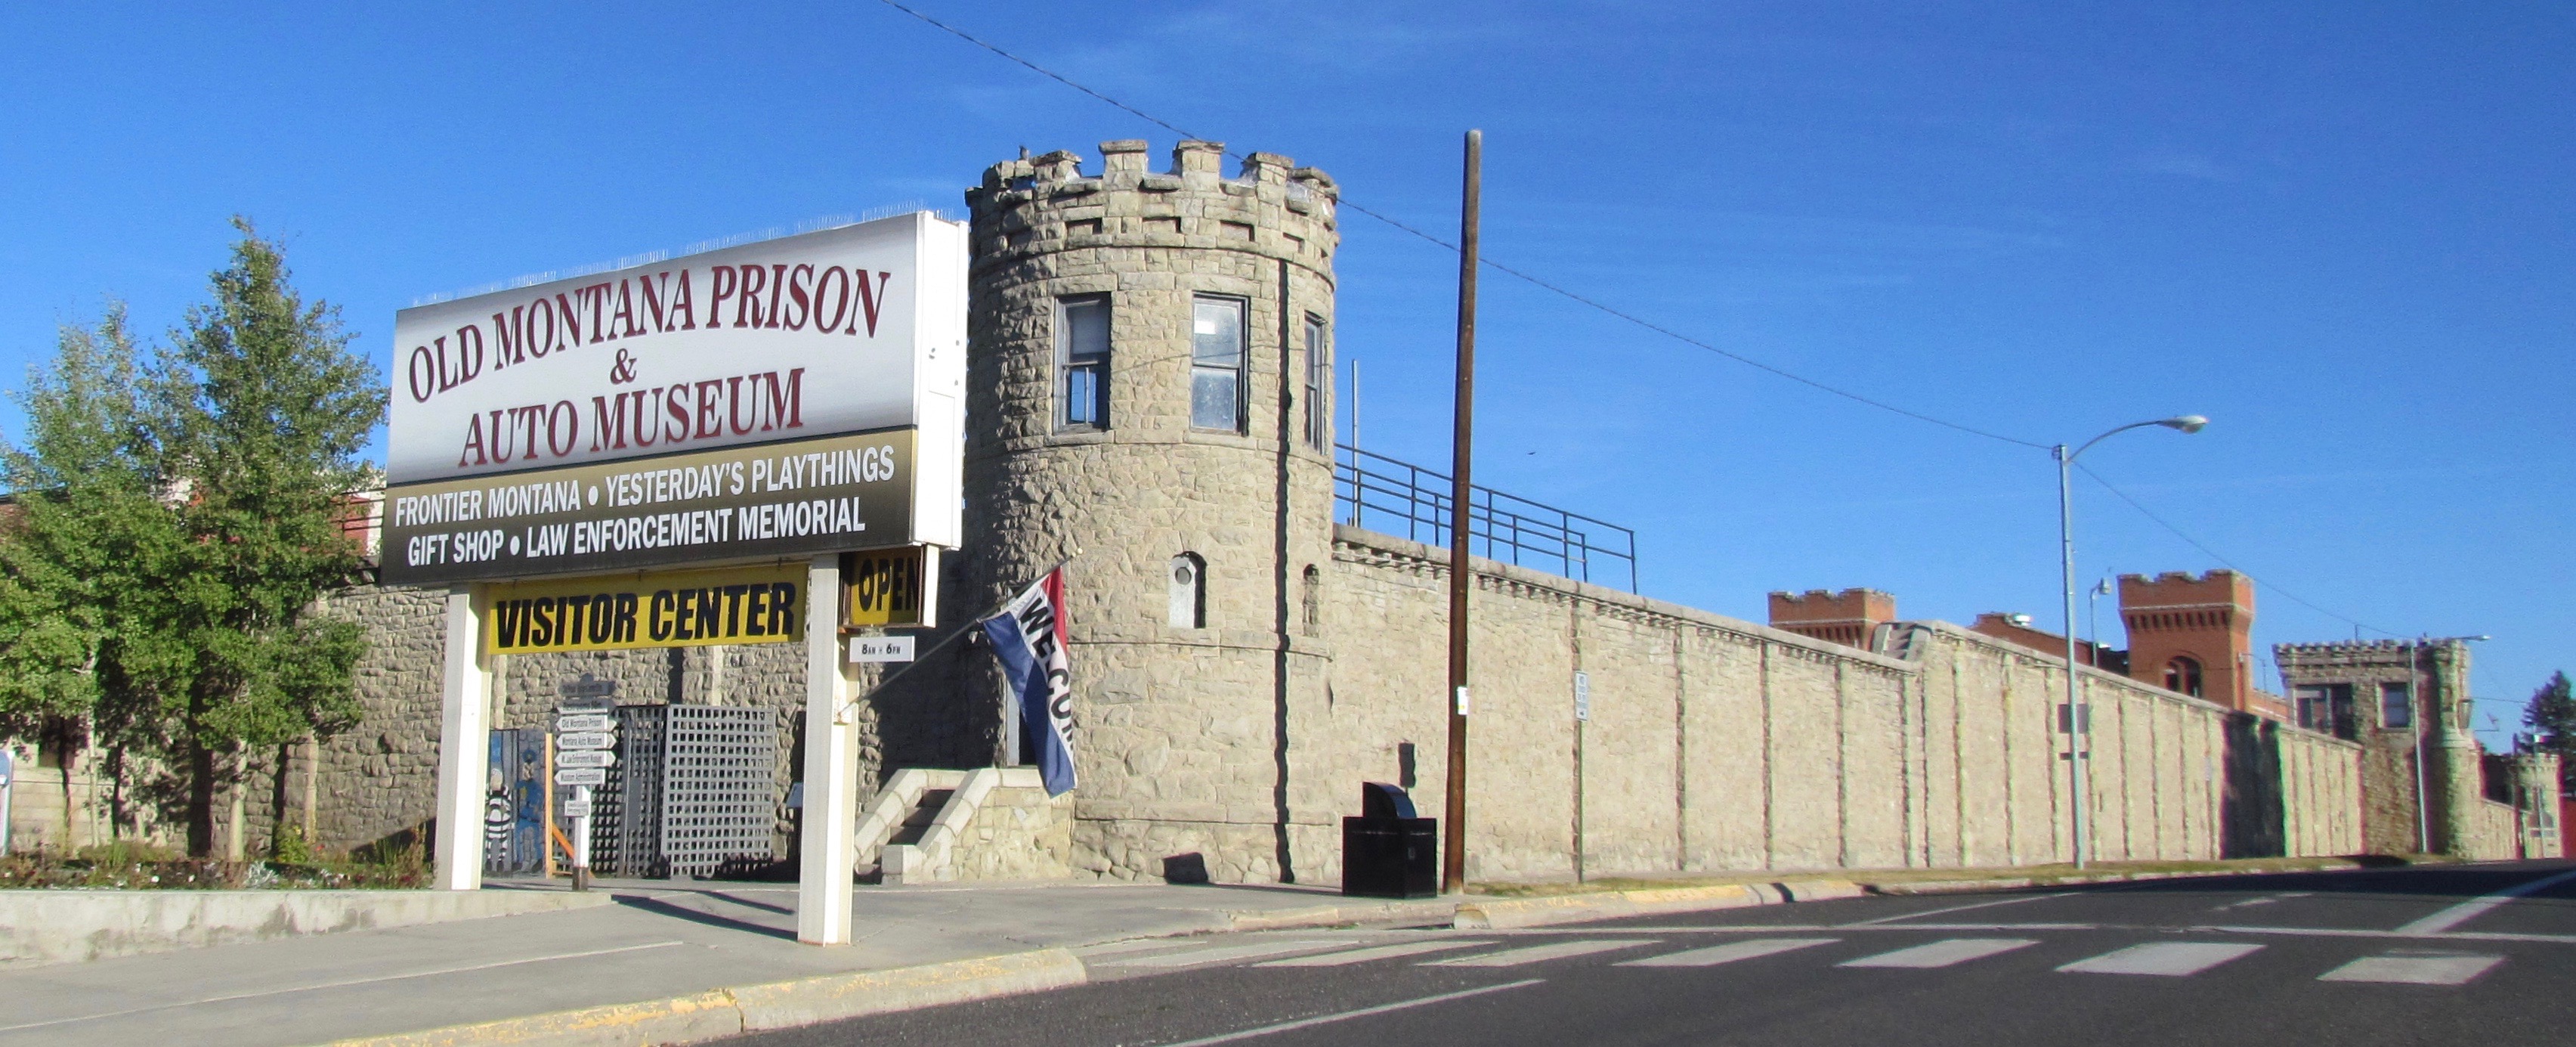 , Prison break: A tour of the Old Montana Prison includes adjacent car museum, ClassicCars.com Journal